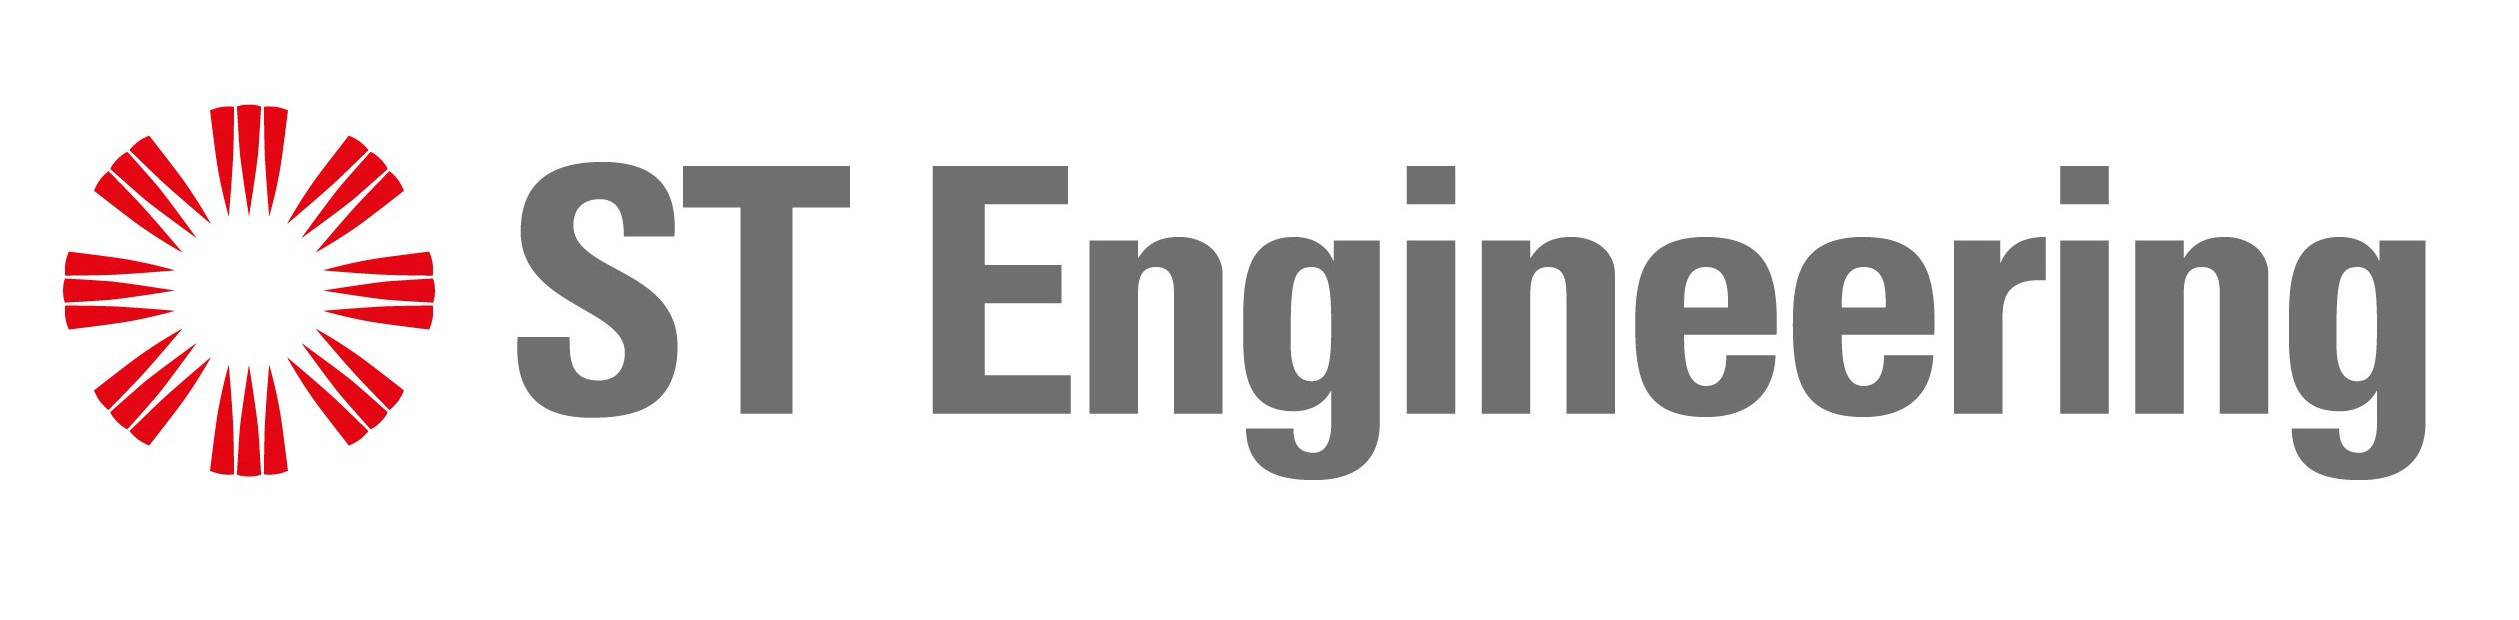 St Engineering Marine Ltd. company logo